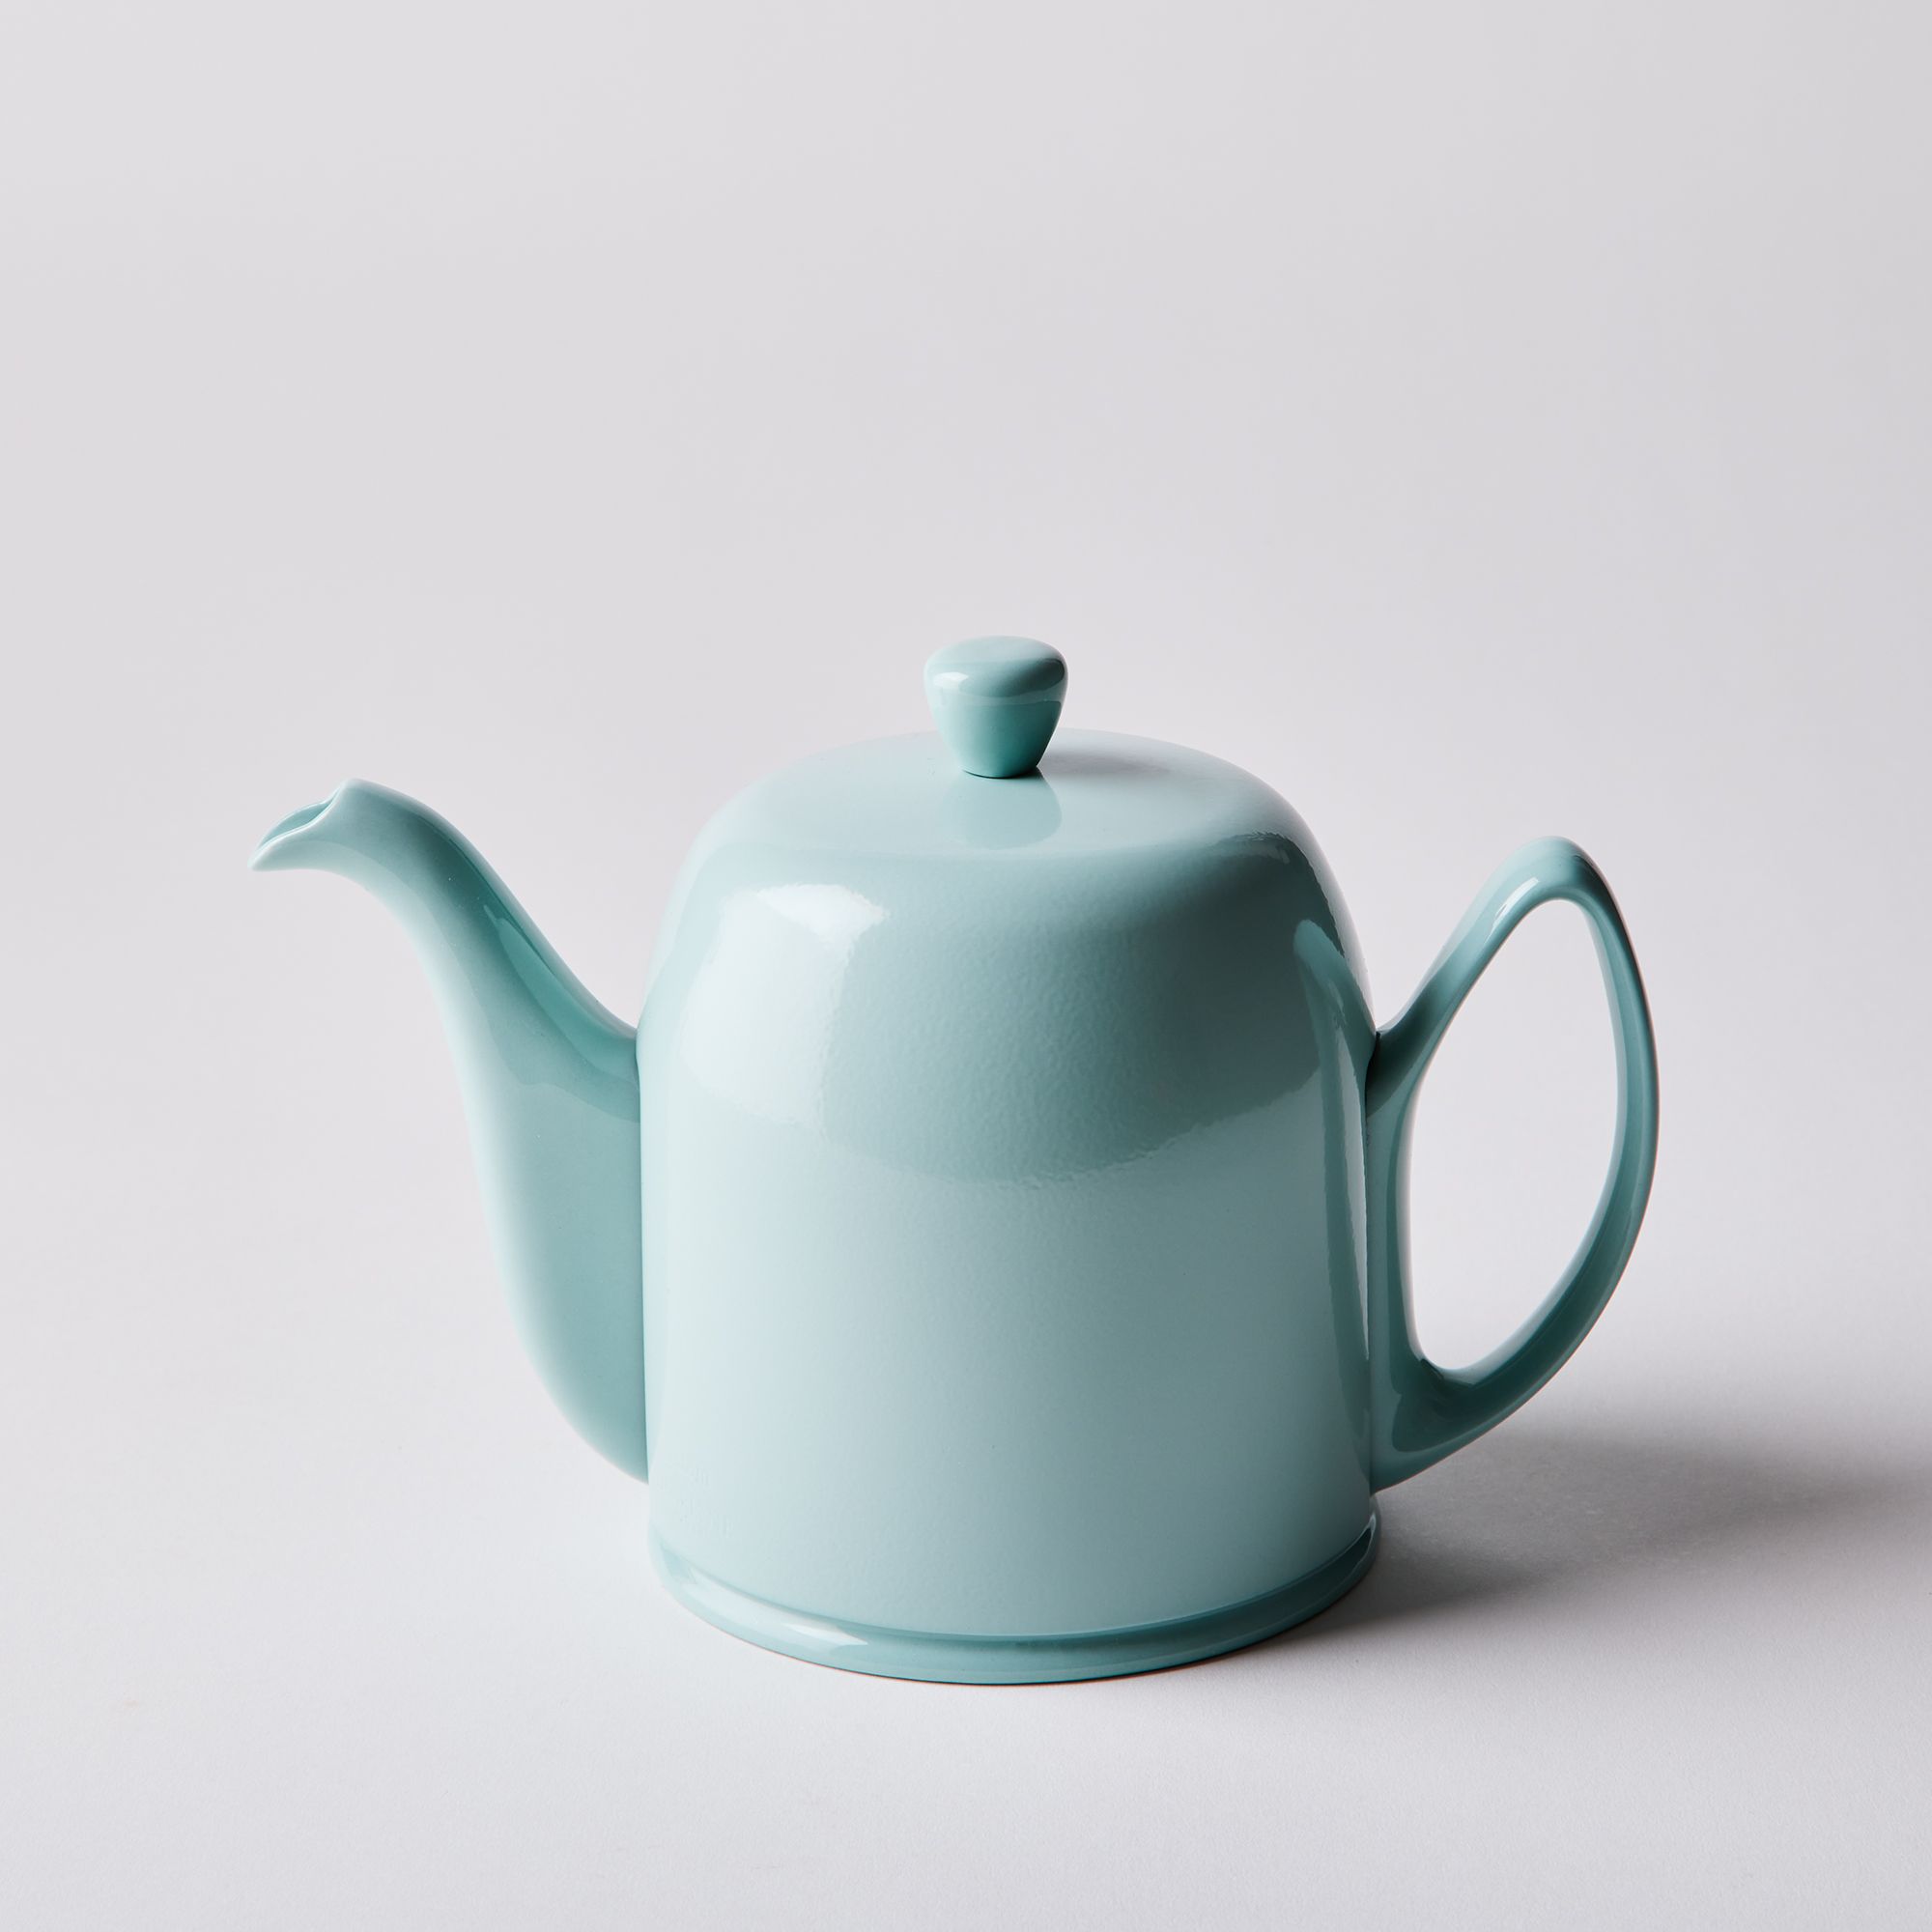 Tea by Channon Coats